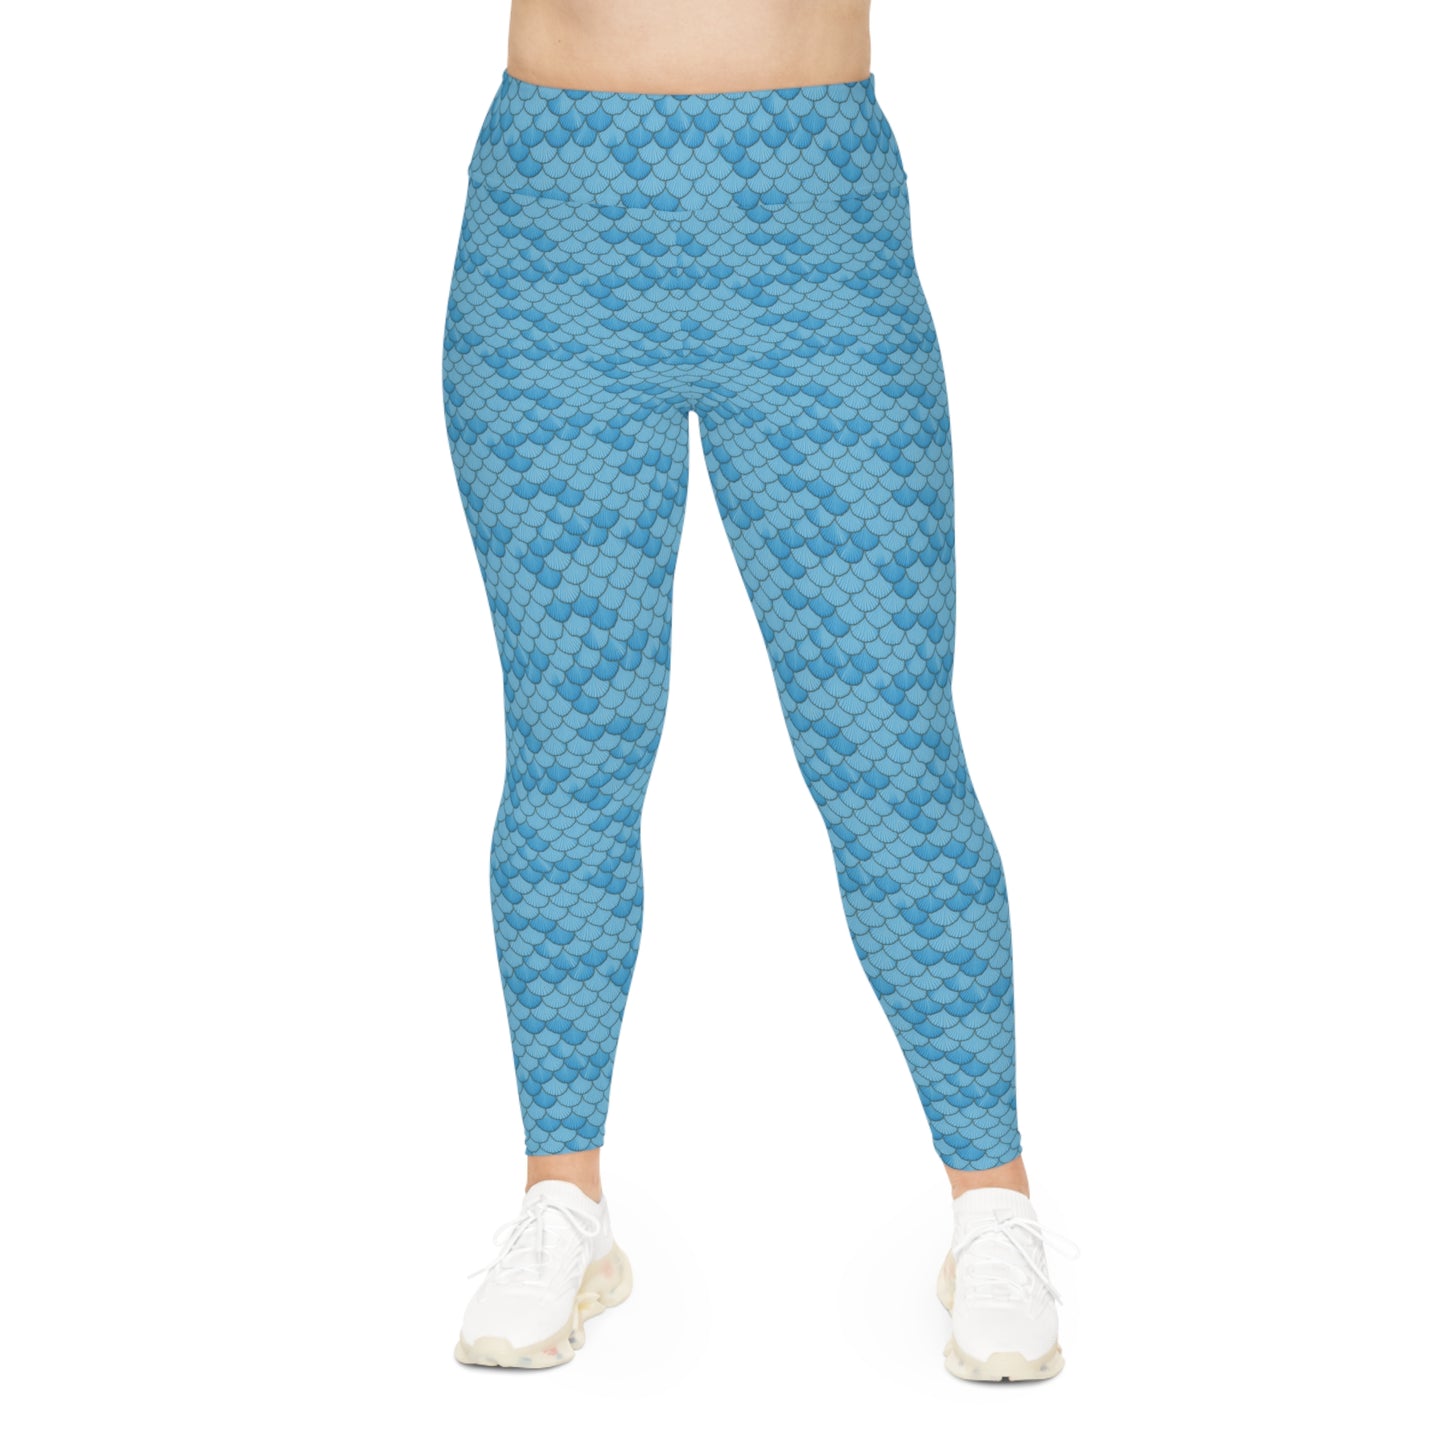 Plus Size Leggings - Blue Seashell Mermaid Scales Design - 4-Way Stretch, High-Rise Waistband, UPF 50+, Workout, Activewear, Stylish Fashion